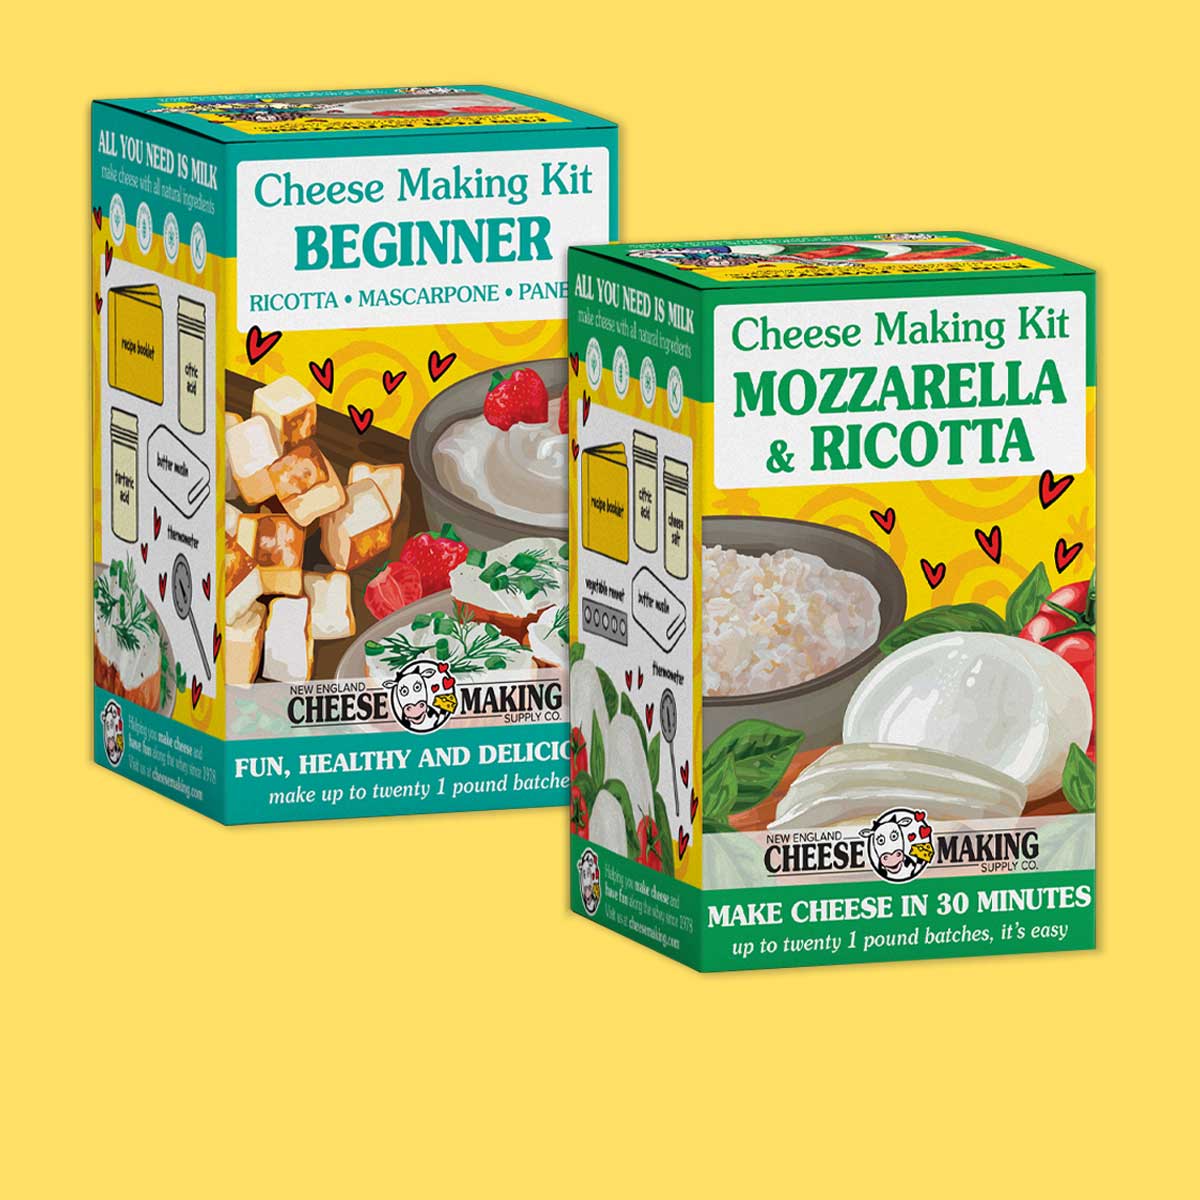 Beginner cheese making kit and 30 minute mozzarella and ricotta cheese making kit